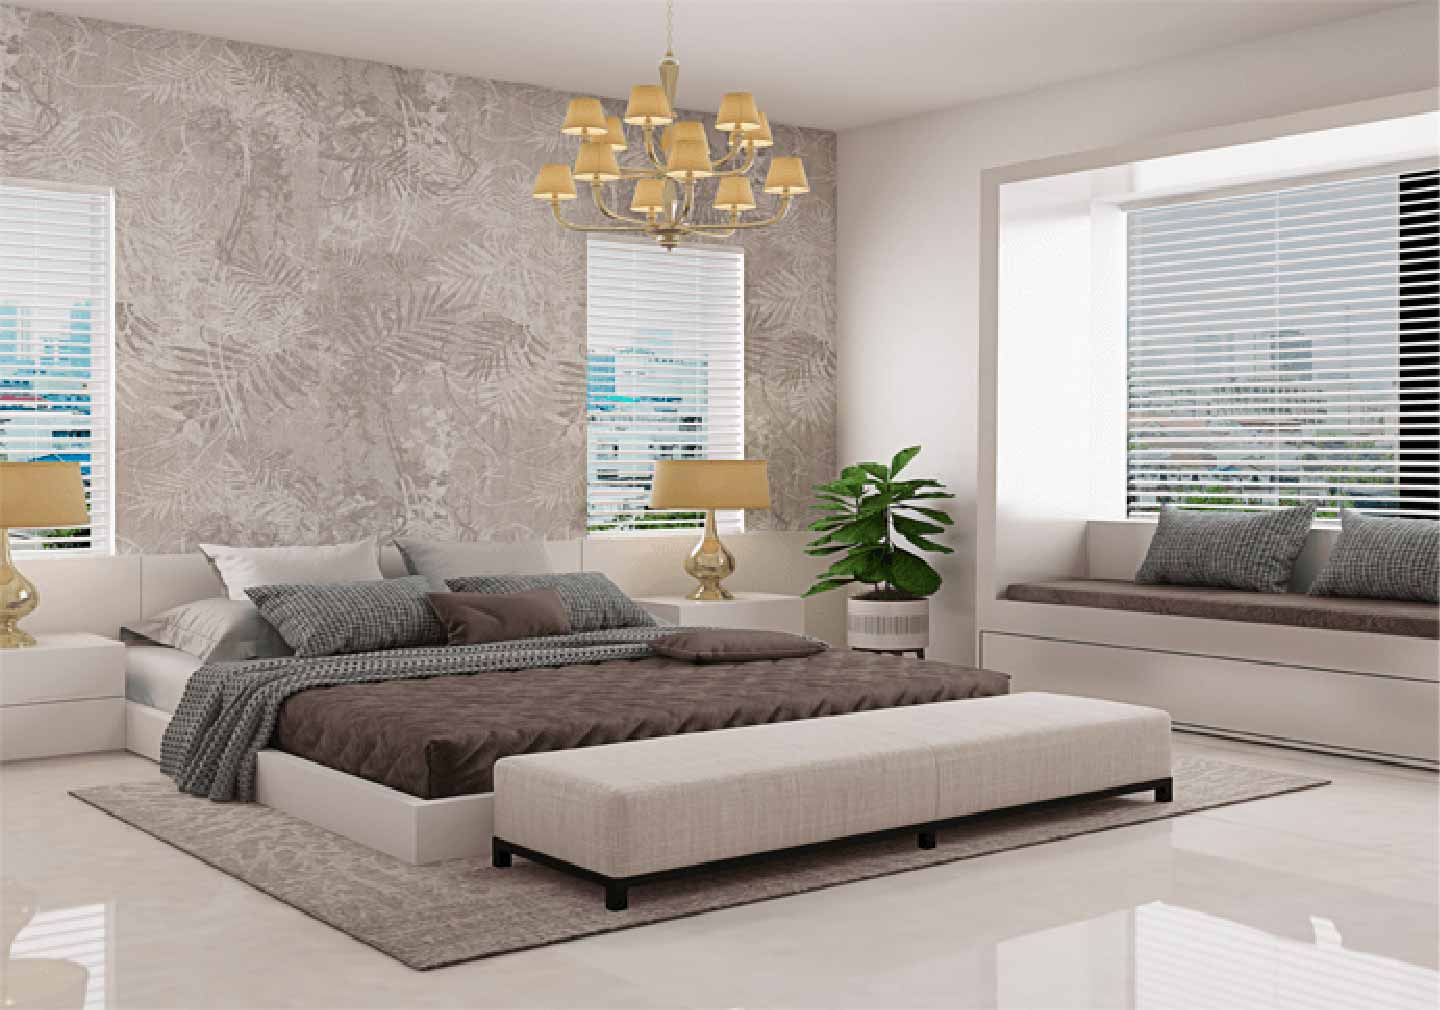 Additional Seating - Bedroom Interior Design